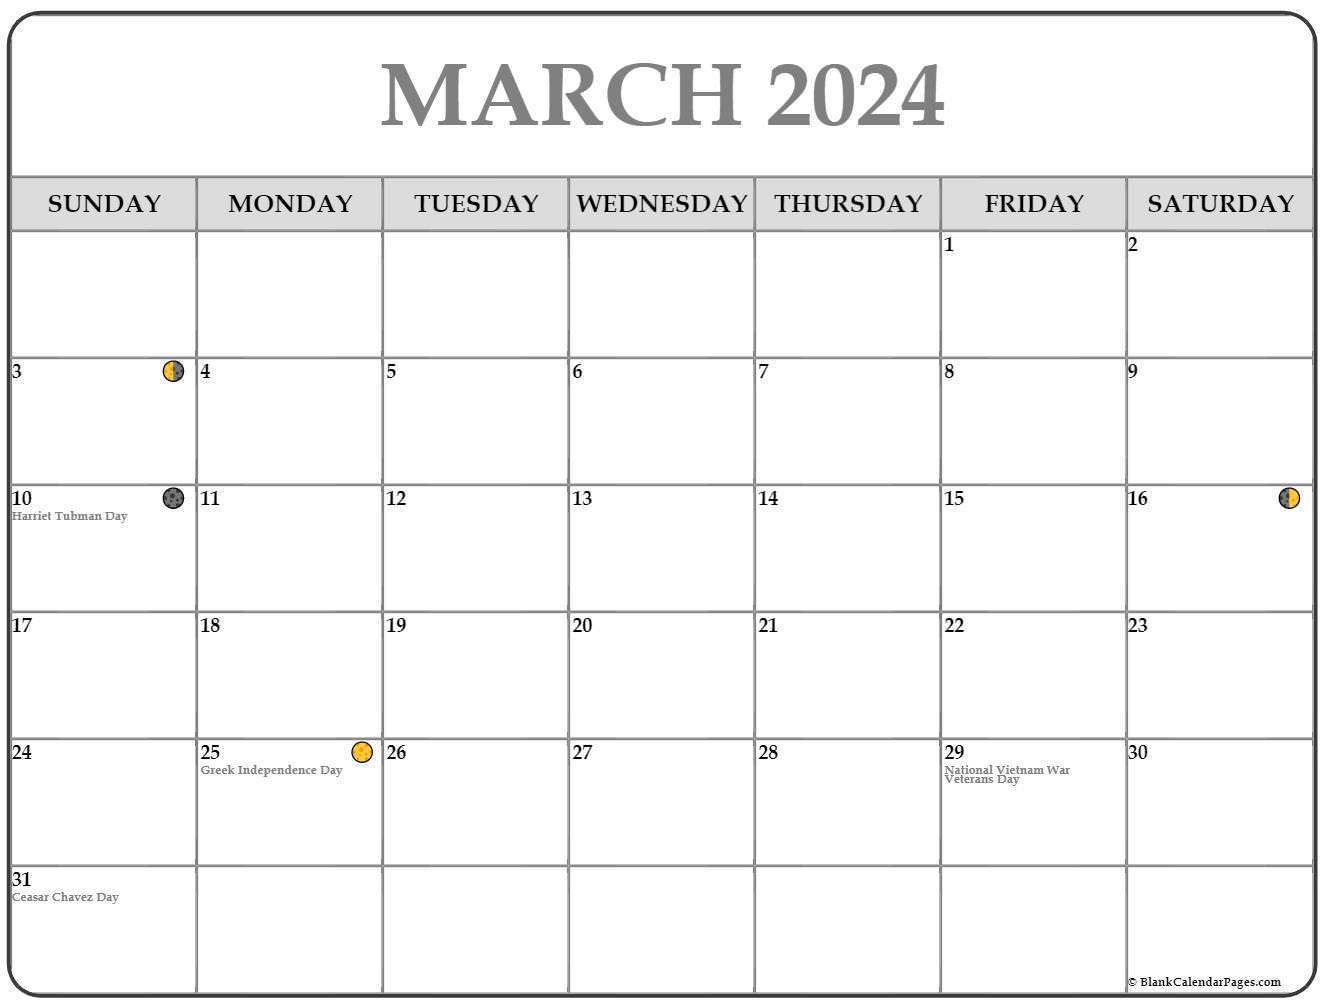 2024 March Lunar Calendar Printable Pictures Peri Trista